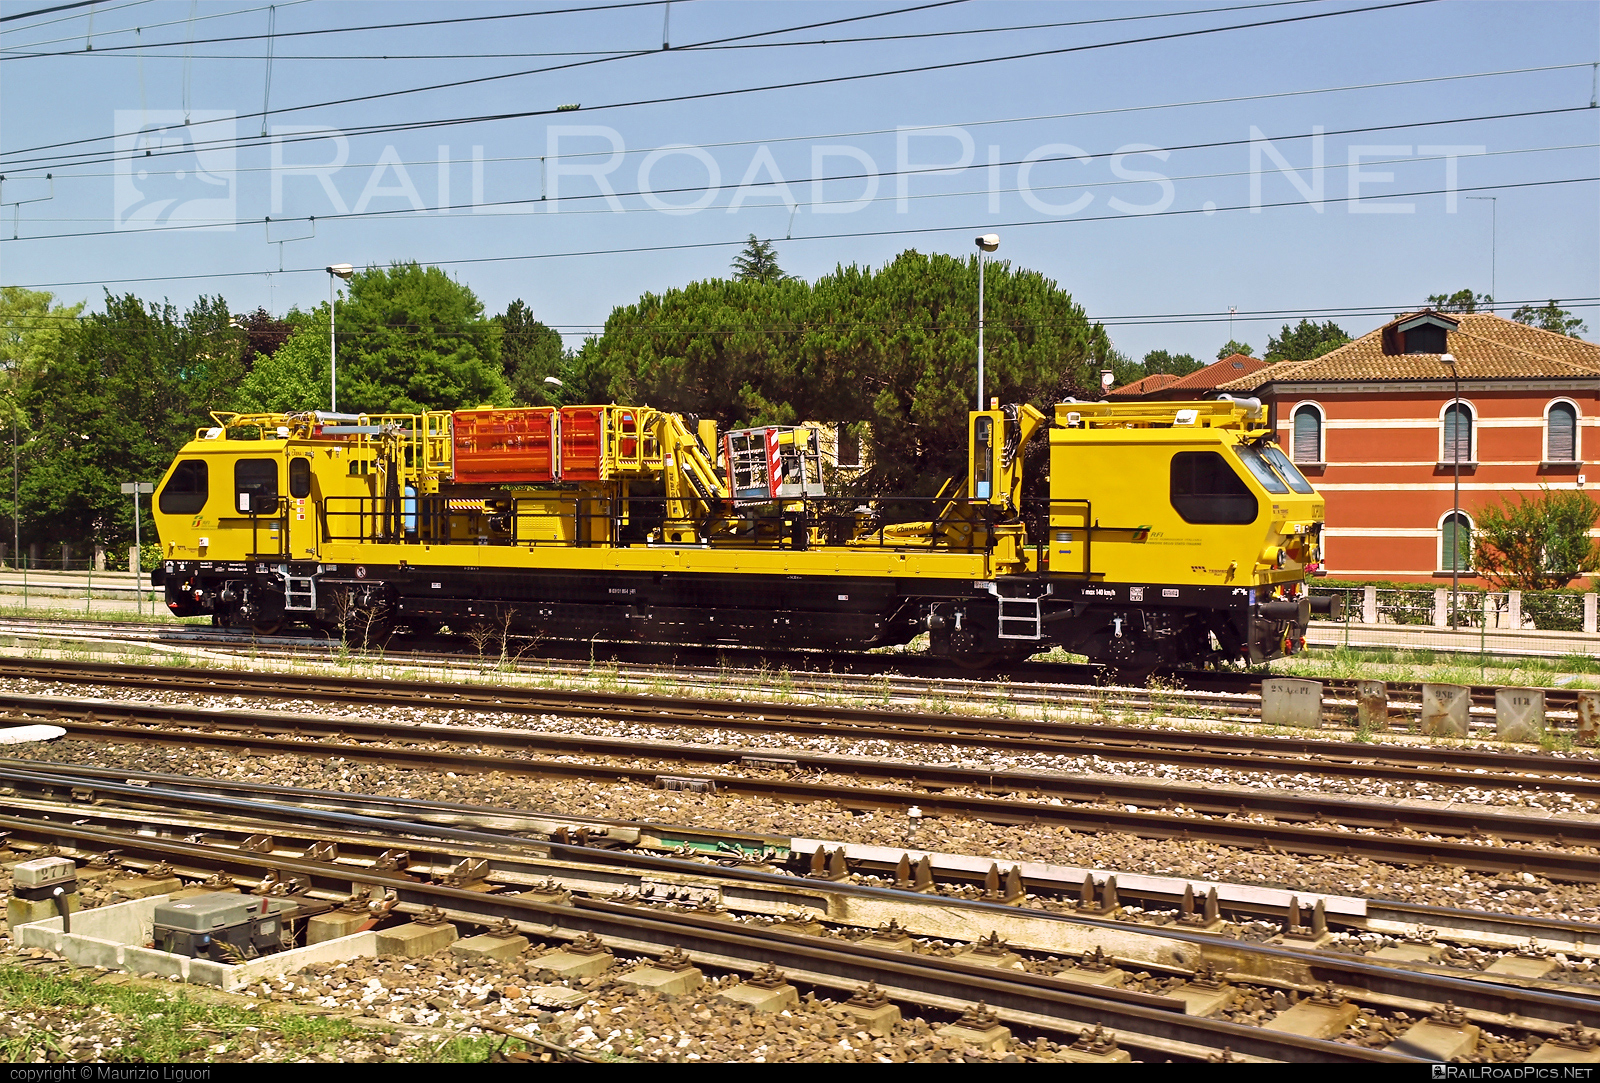 Tesmec OCPD001 - 131 093-0 operated by Rete Ferroviaria Italiana #ReteFerroviariaItaliana #ferroviedellostato #fs #fsitaliane #ocpd001 #rfi #tesmec #tesmecocpd001